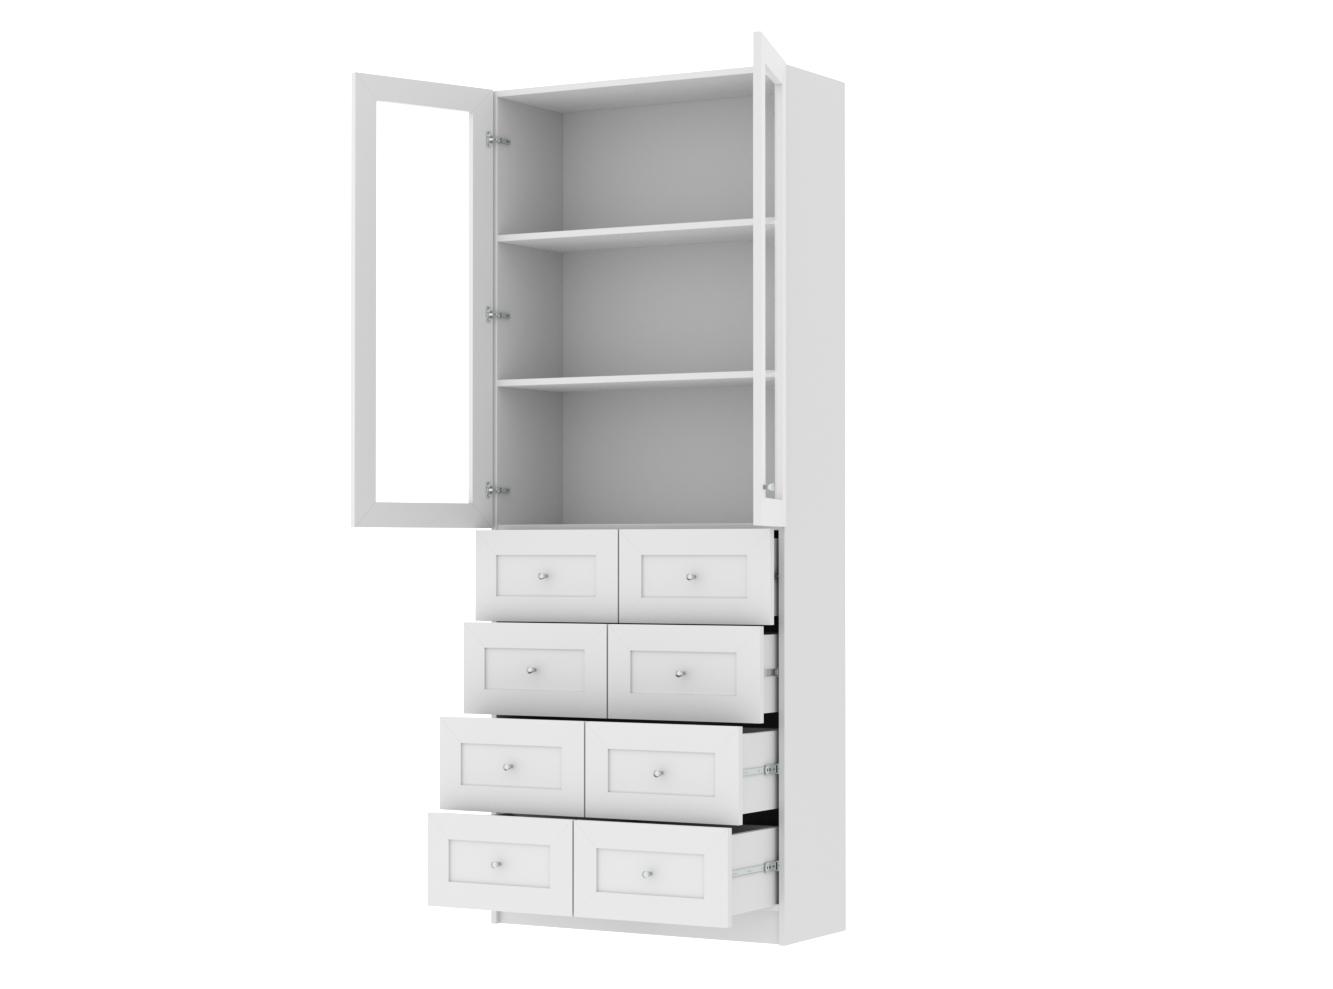 Книжный шкаф Билли 318 white ИКЕА (IKEA) изображение товара